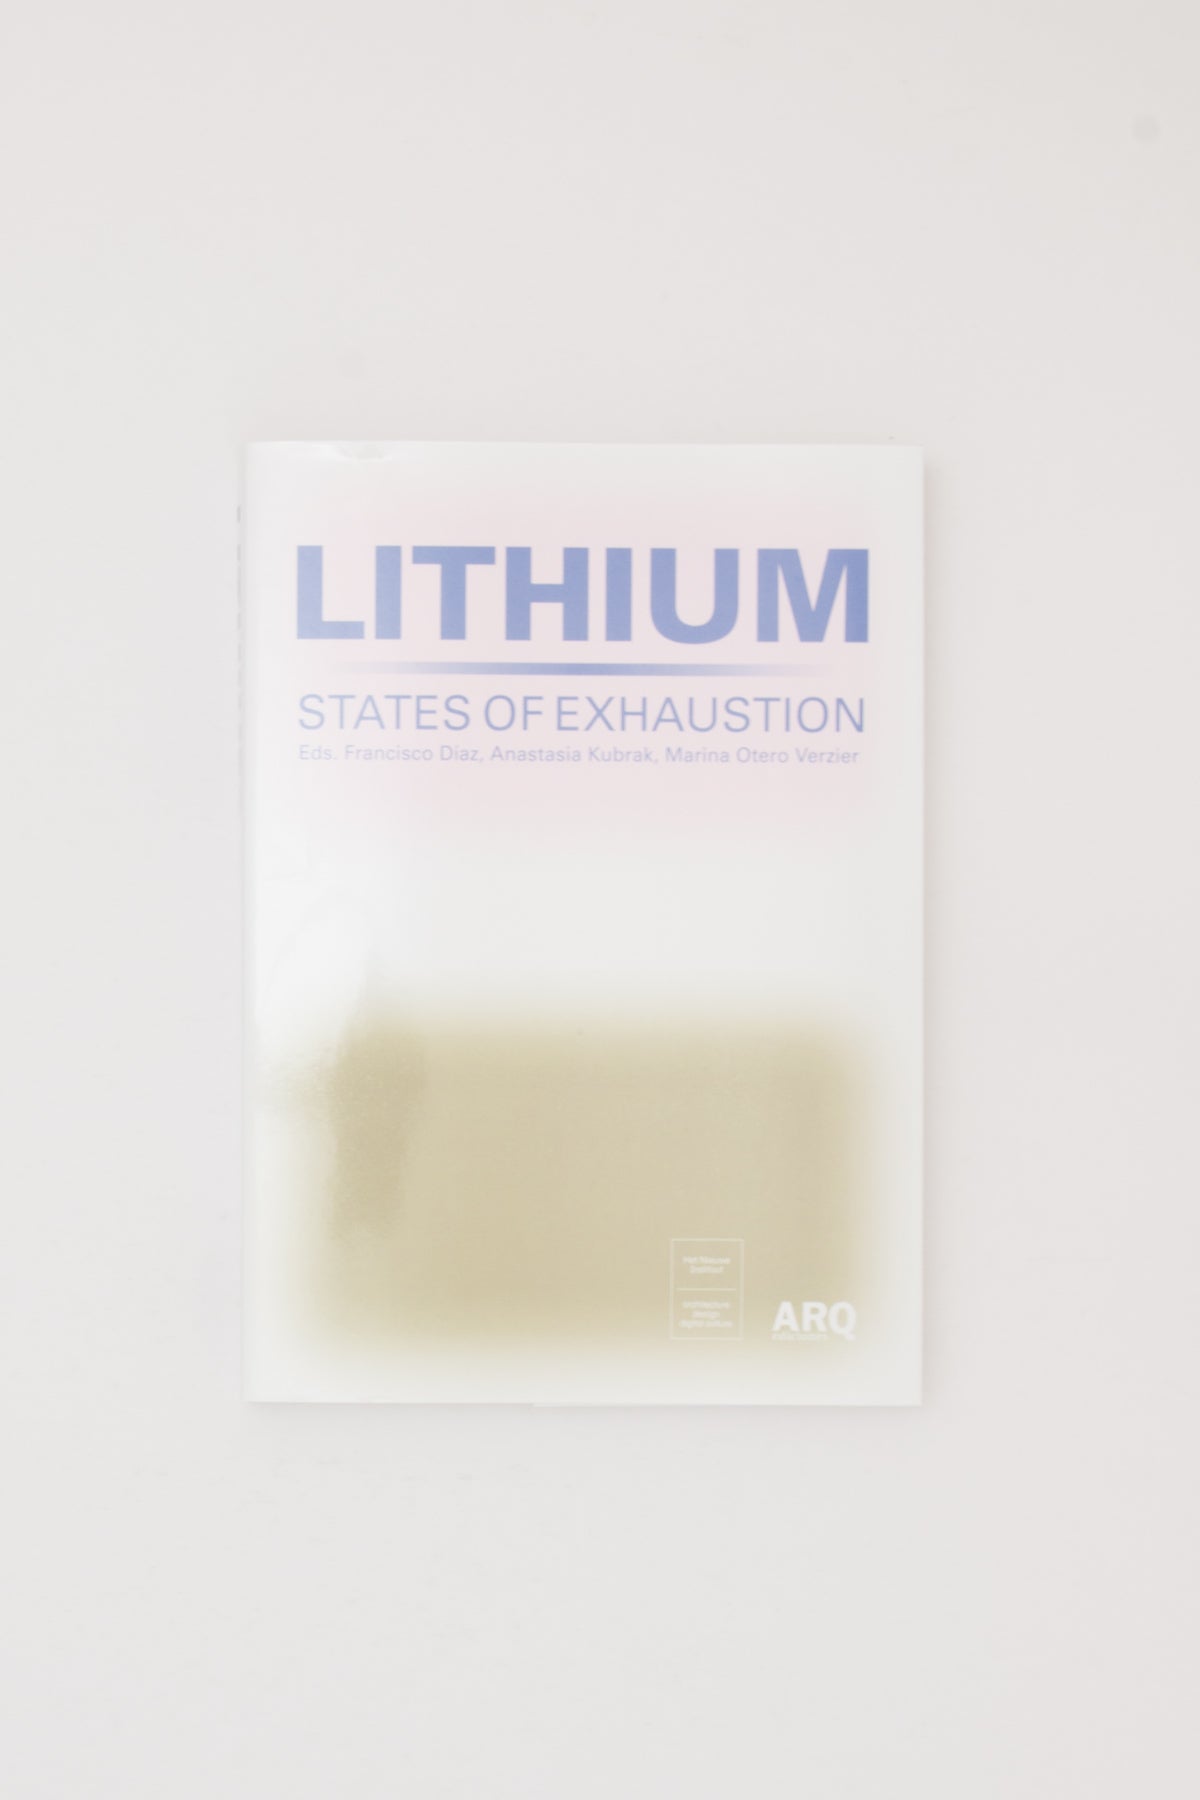 Lithium - States of Exhaustion - Francisco Diaz ed.